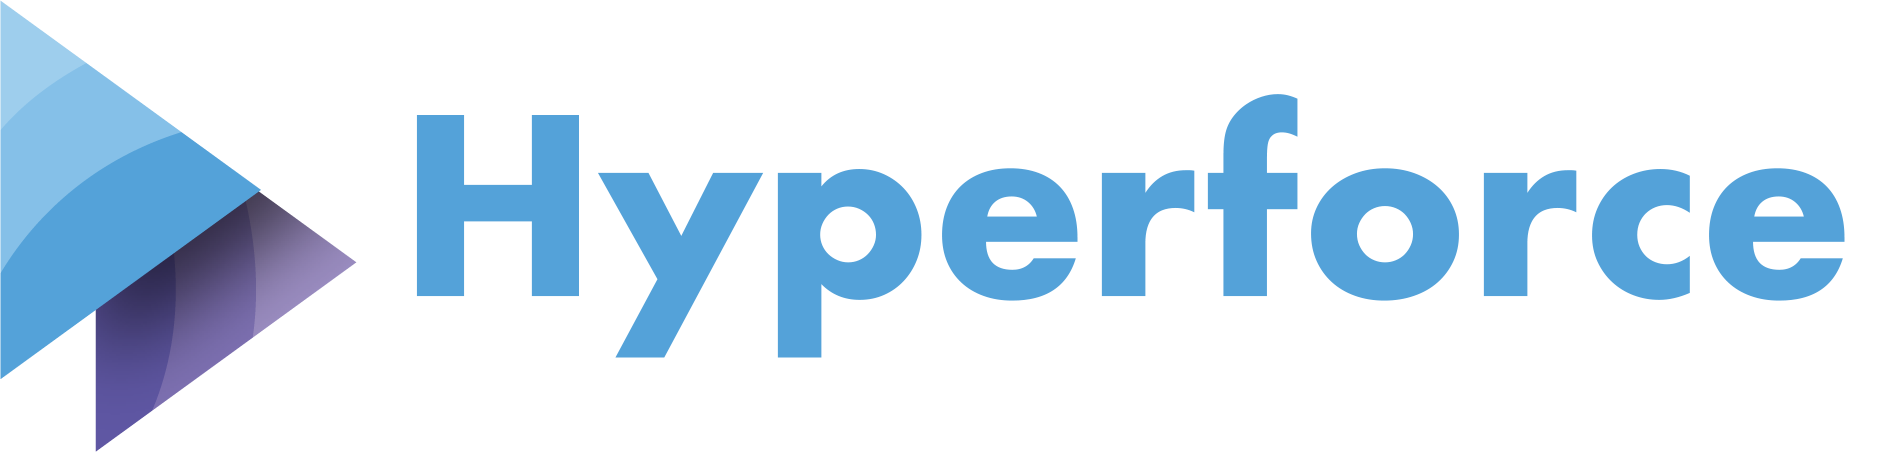 Hyperforce Technologies